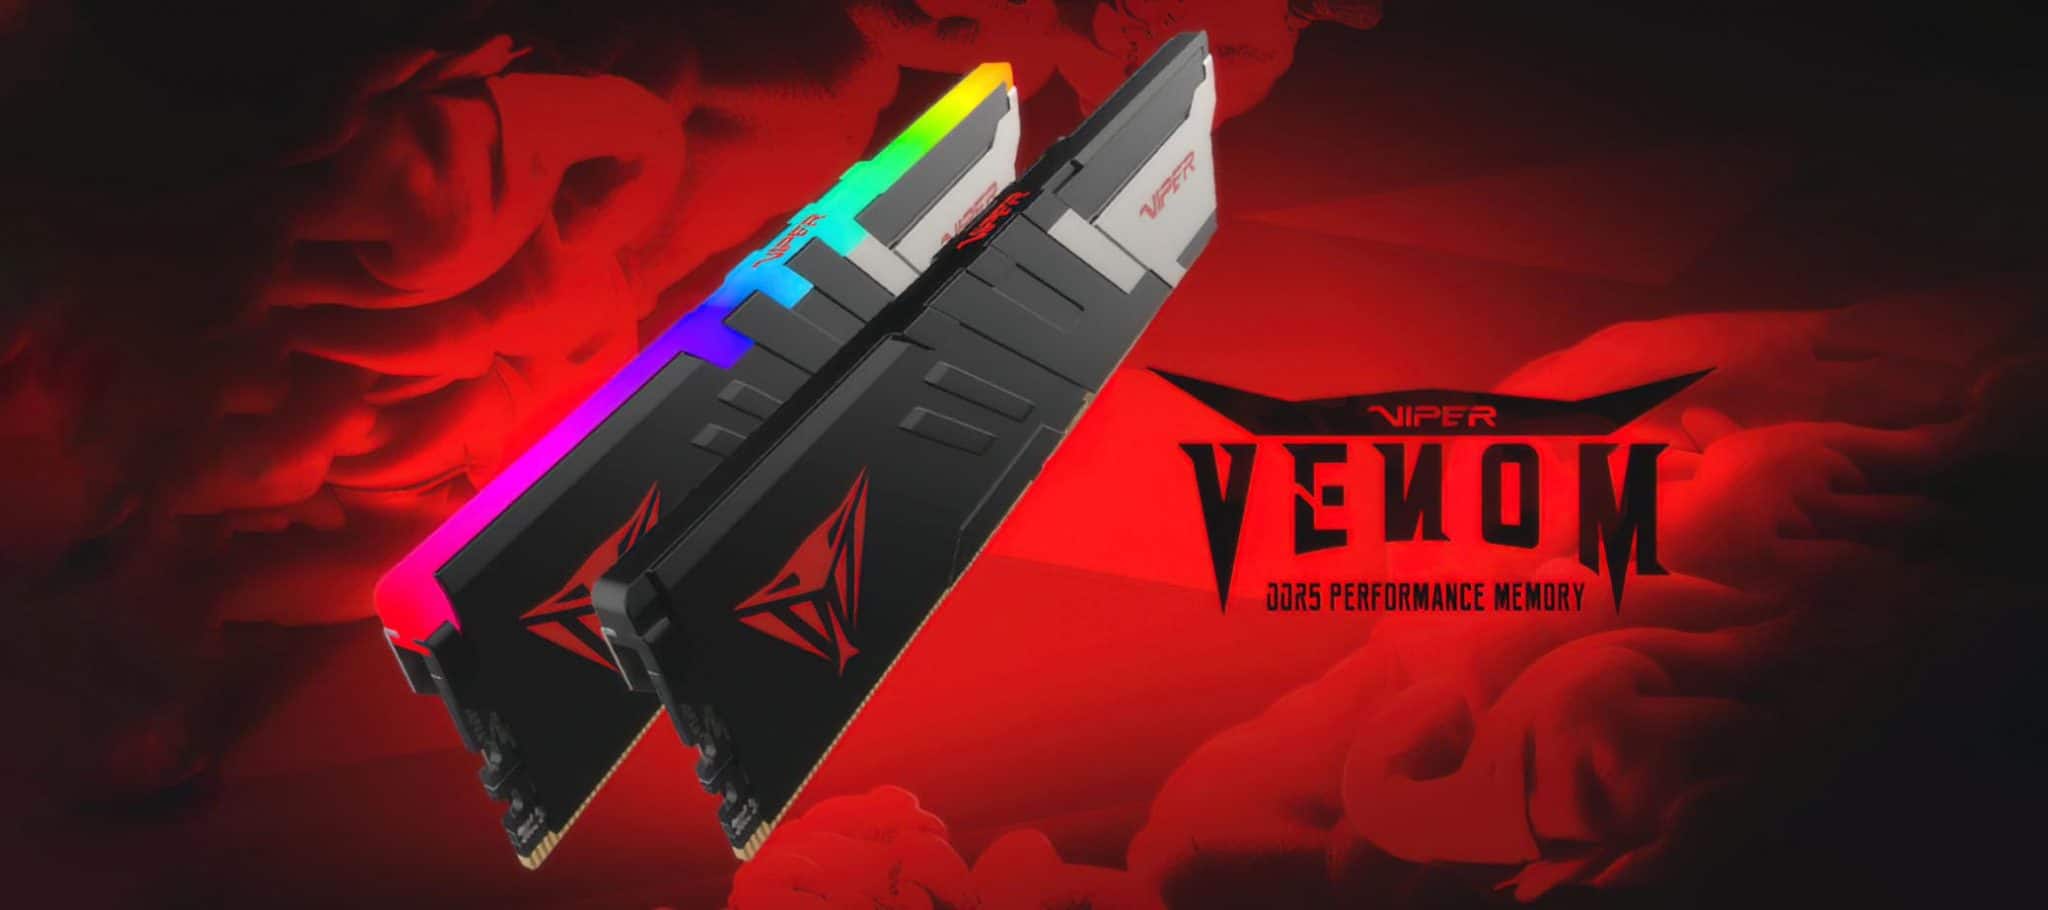 VIPER-Venom-DDR5, GamersRD